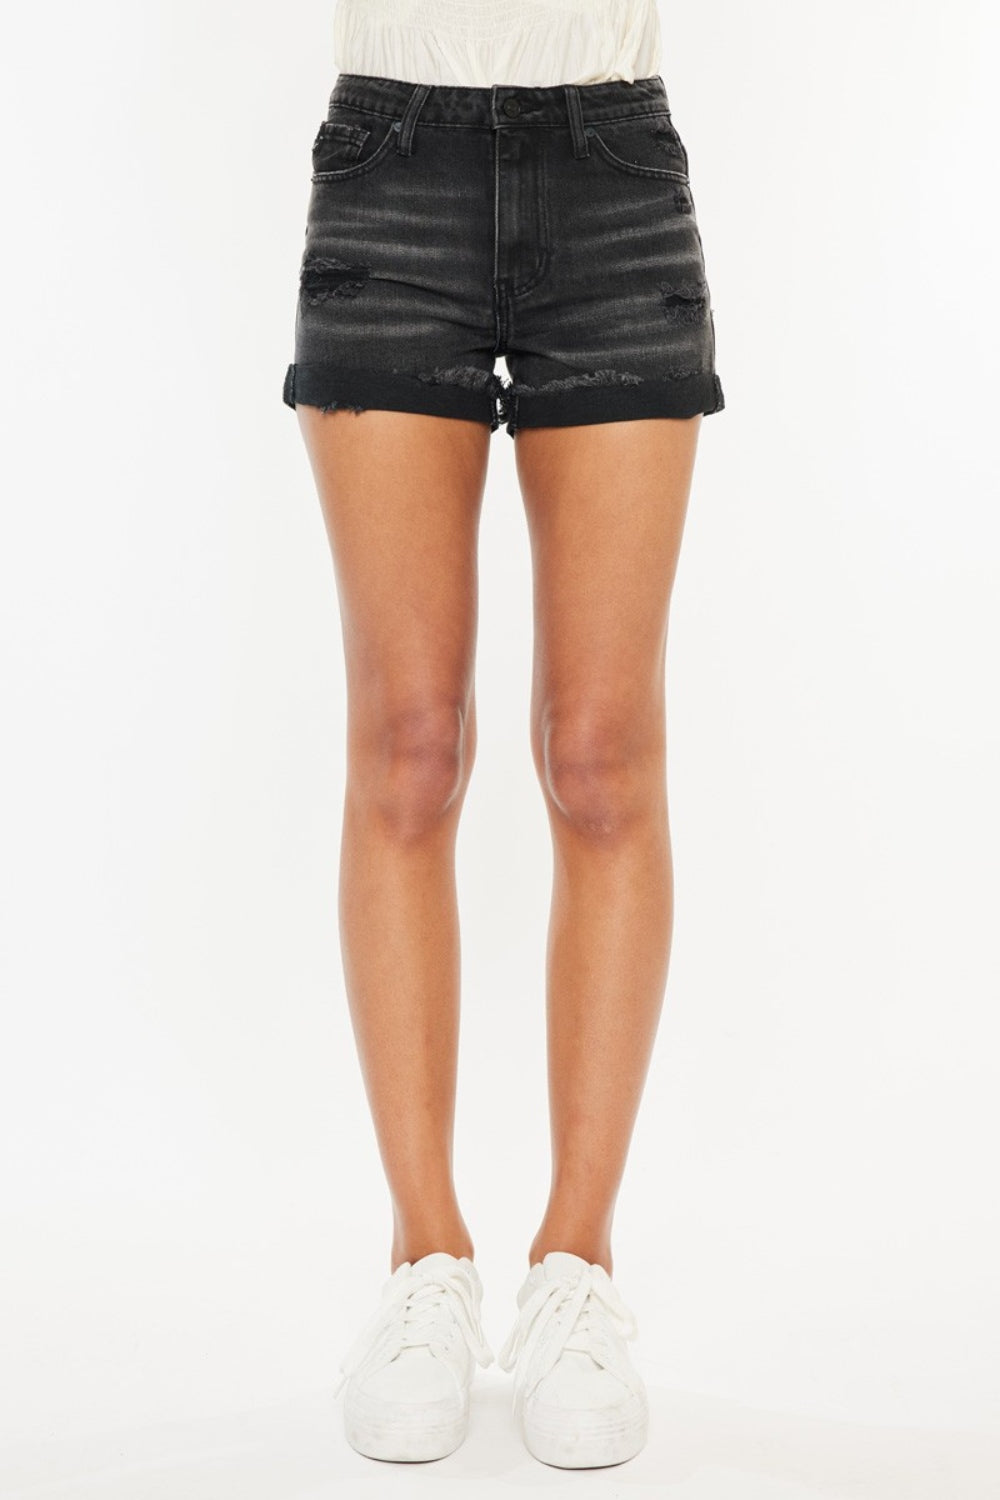 KanCan High Waist Distressed Black Washed Denim Shorts